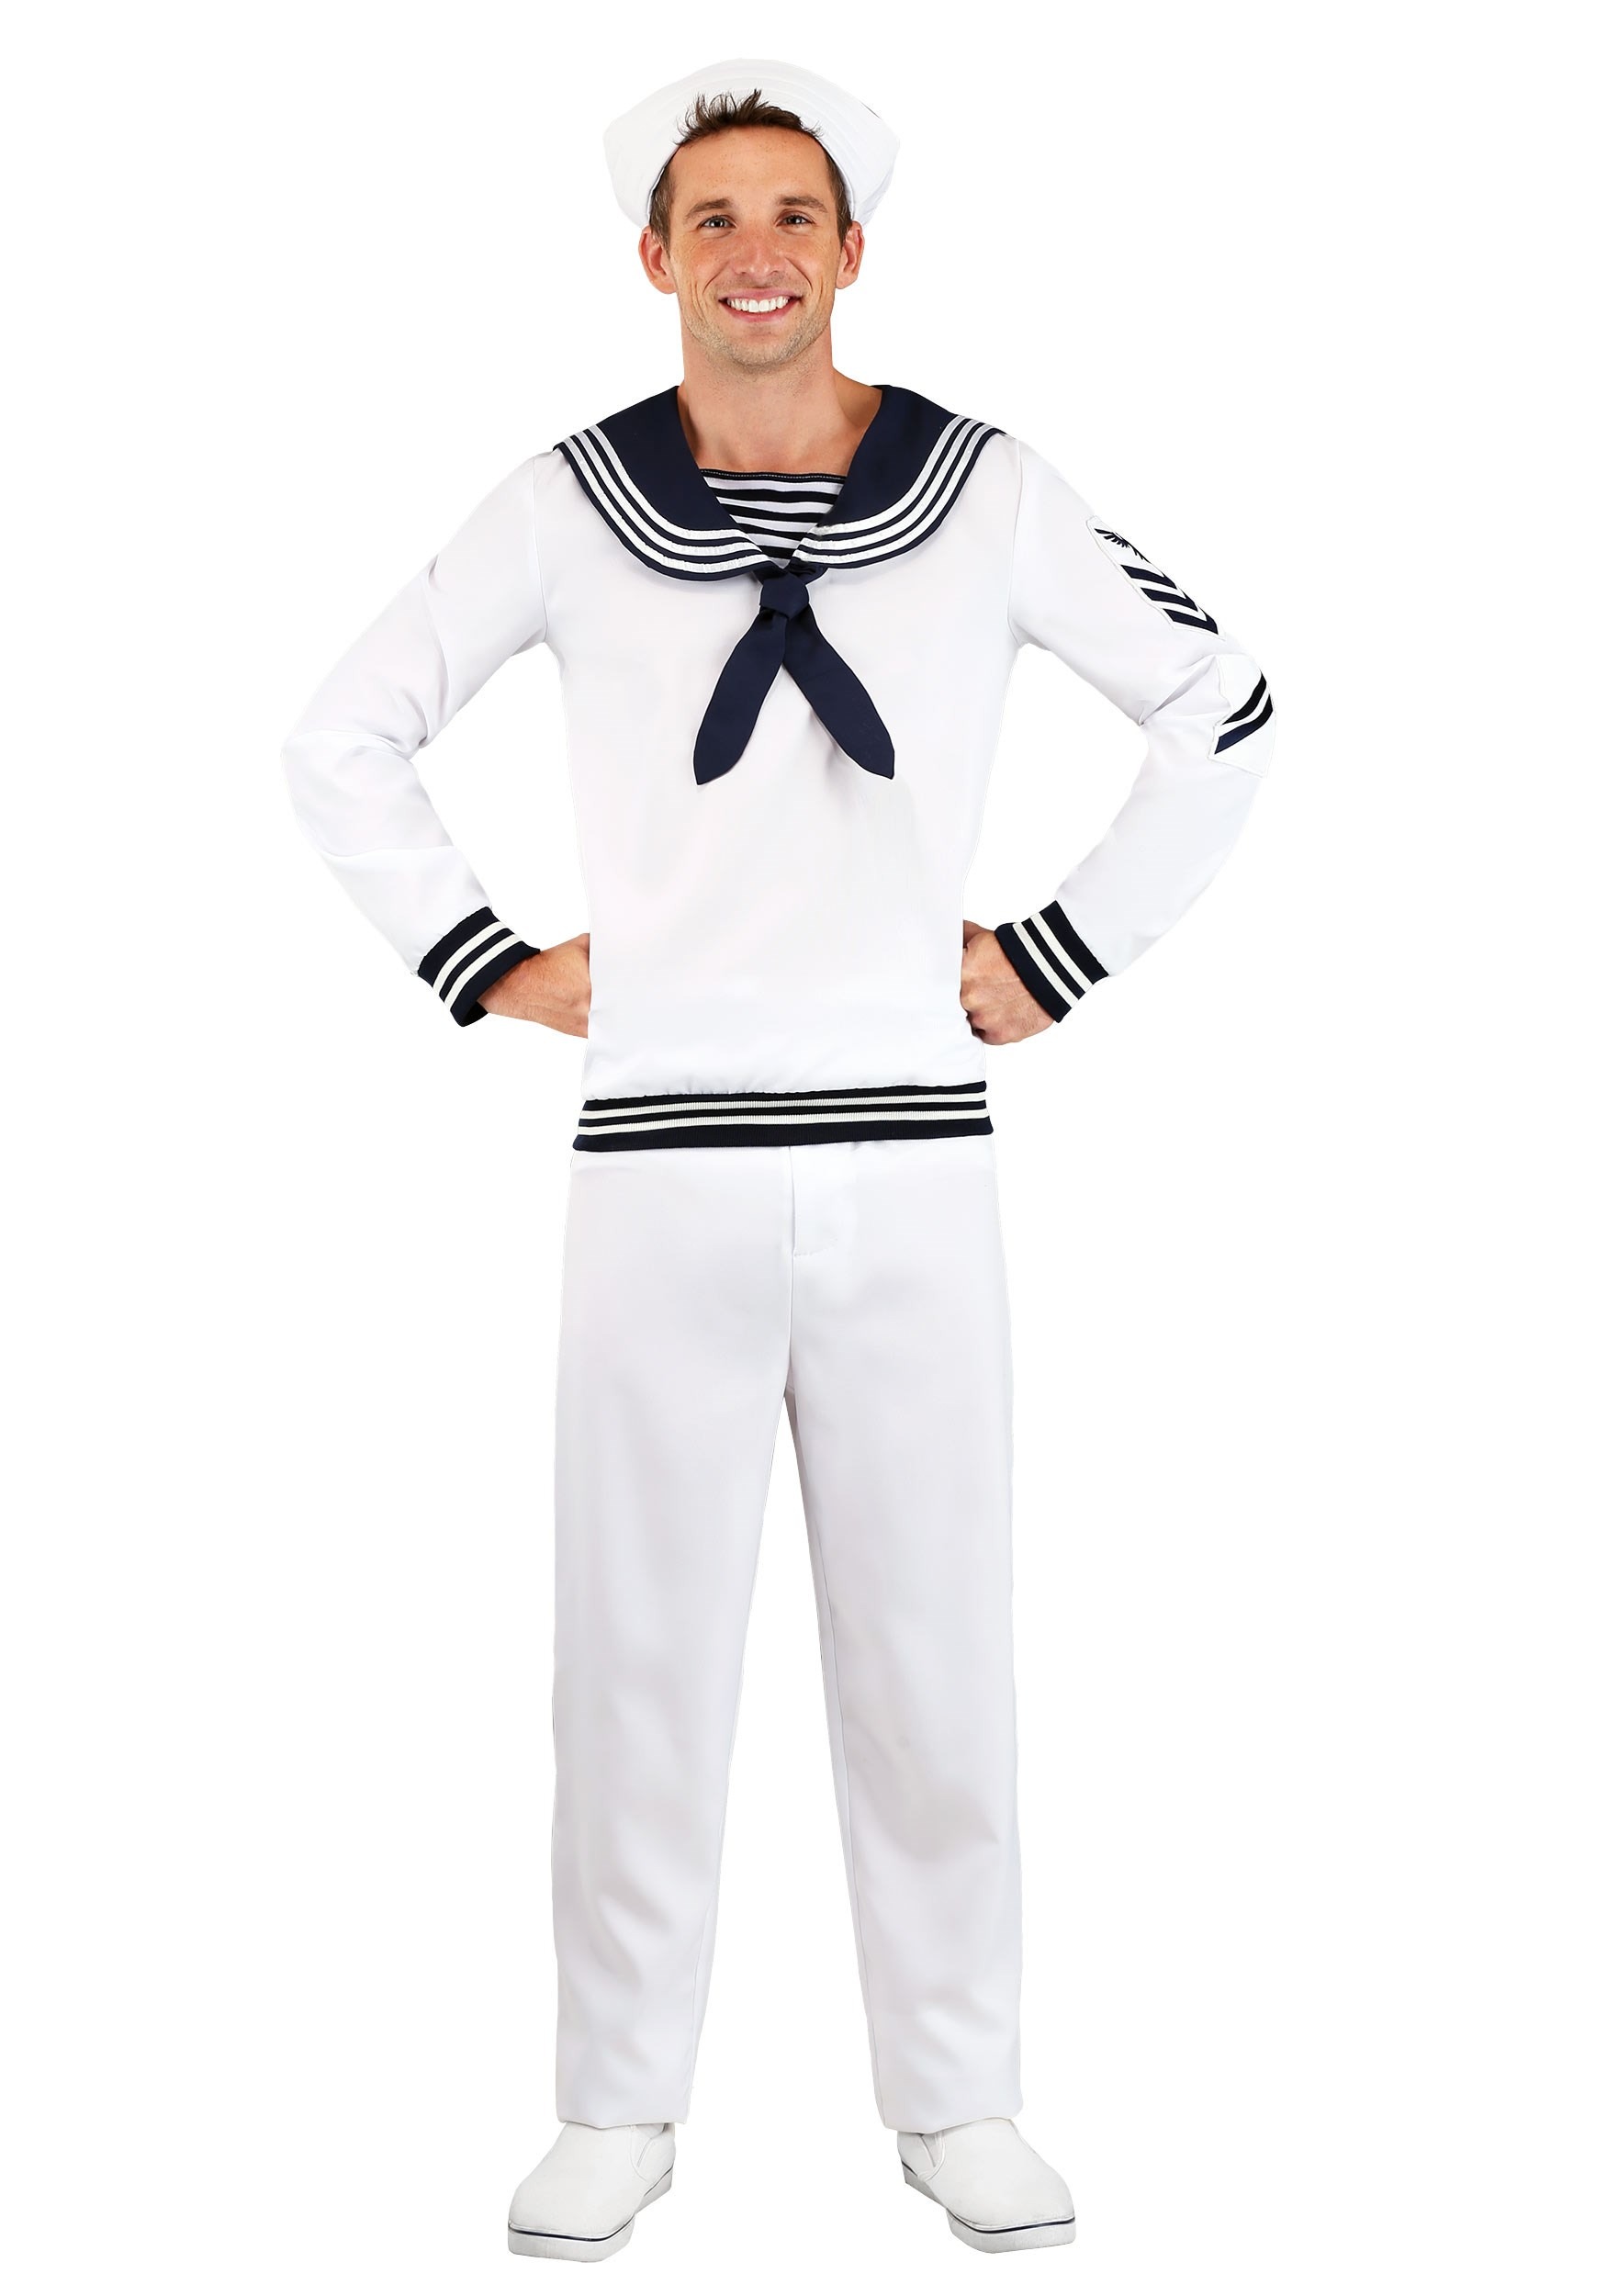 Deckhand Sailor Costume For Men